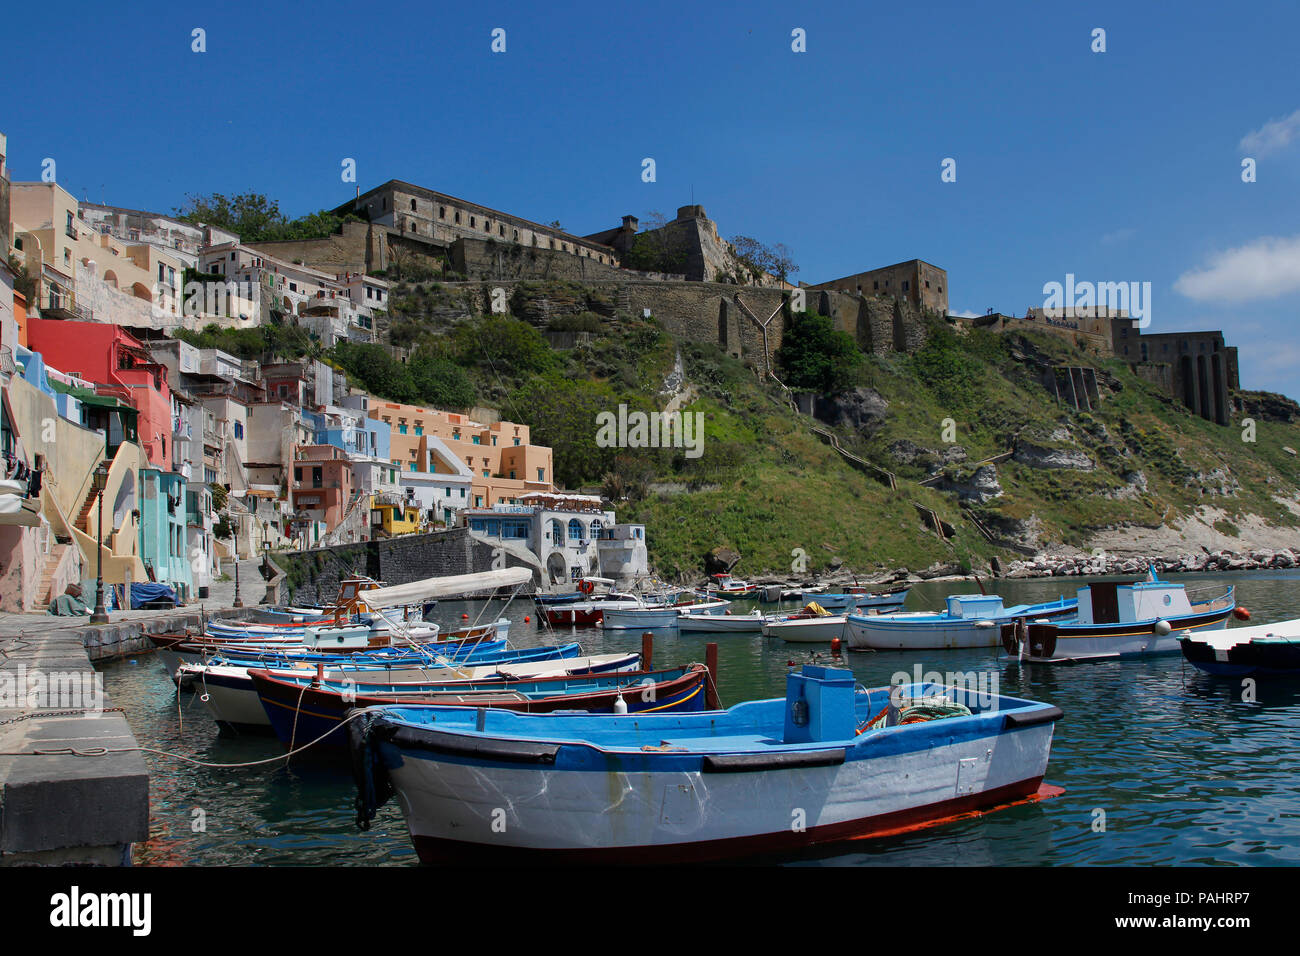 Procida, Beautiful island in the mediterranean sea coast, Marina della Corricella Naples, italy Stock Photo